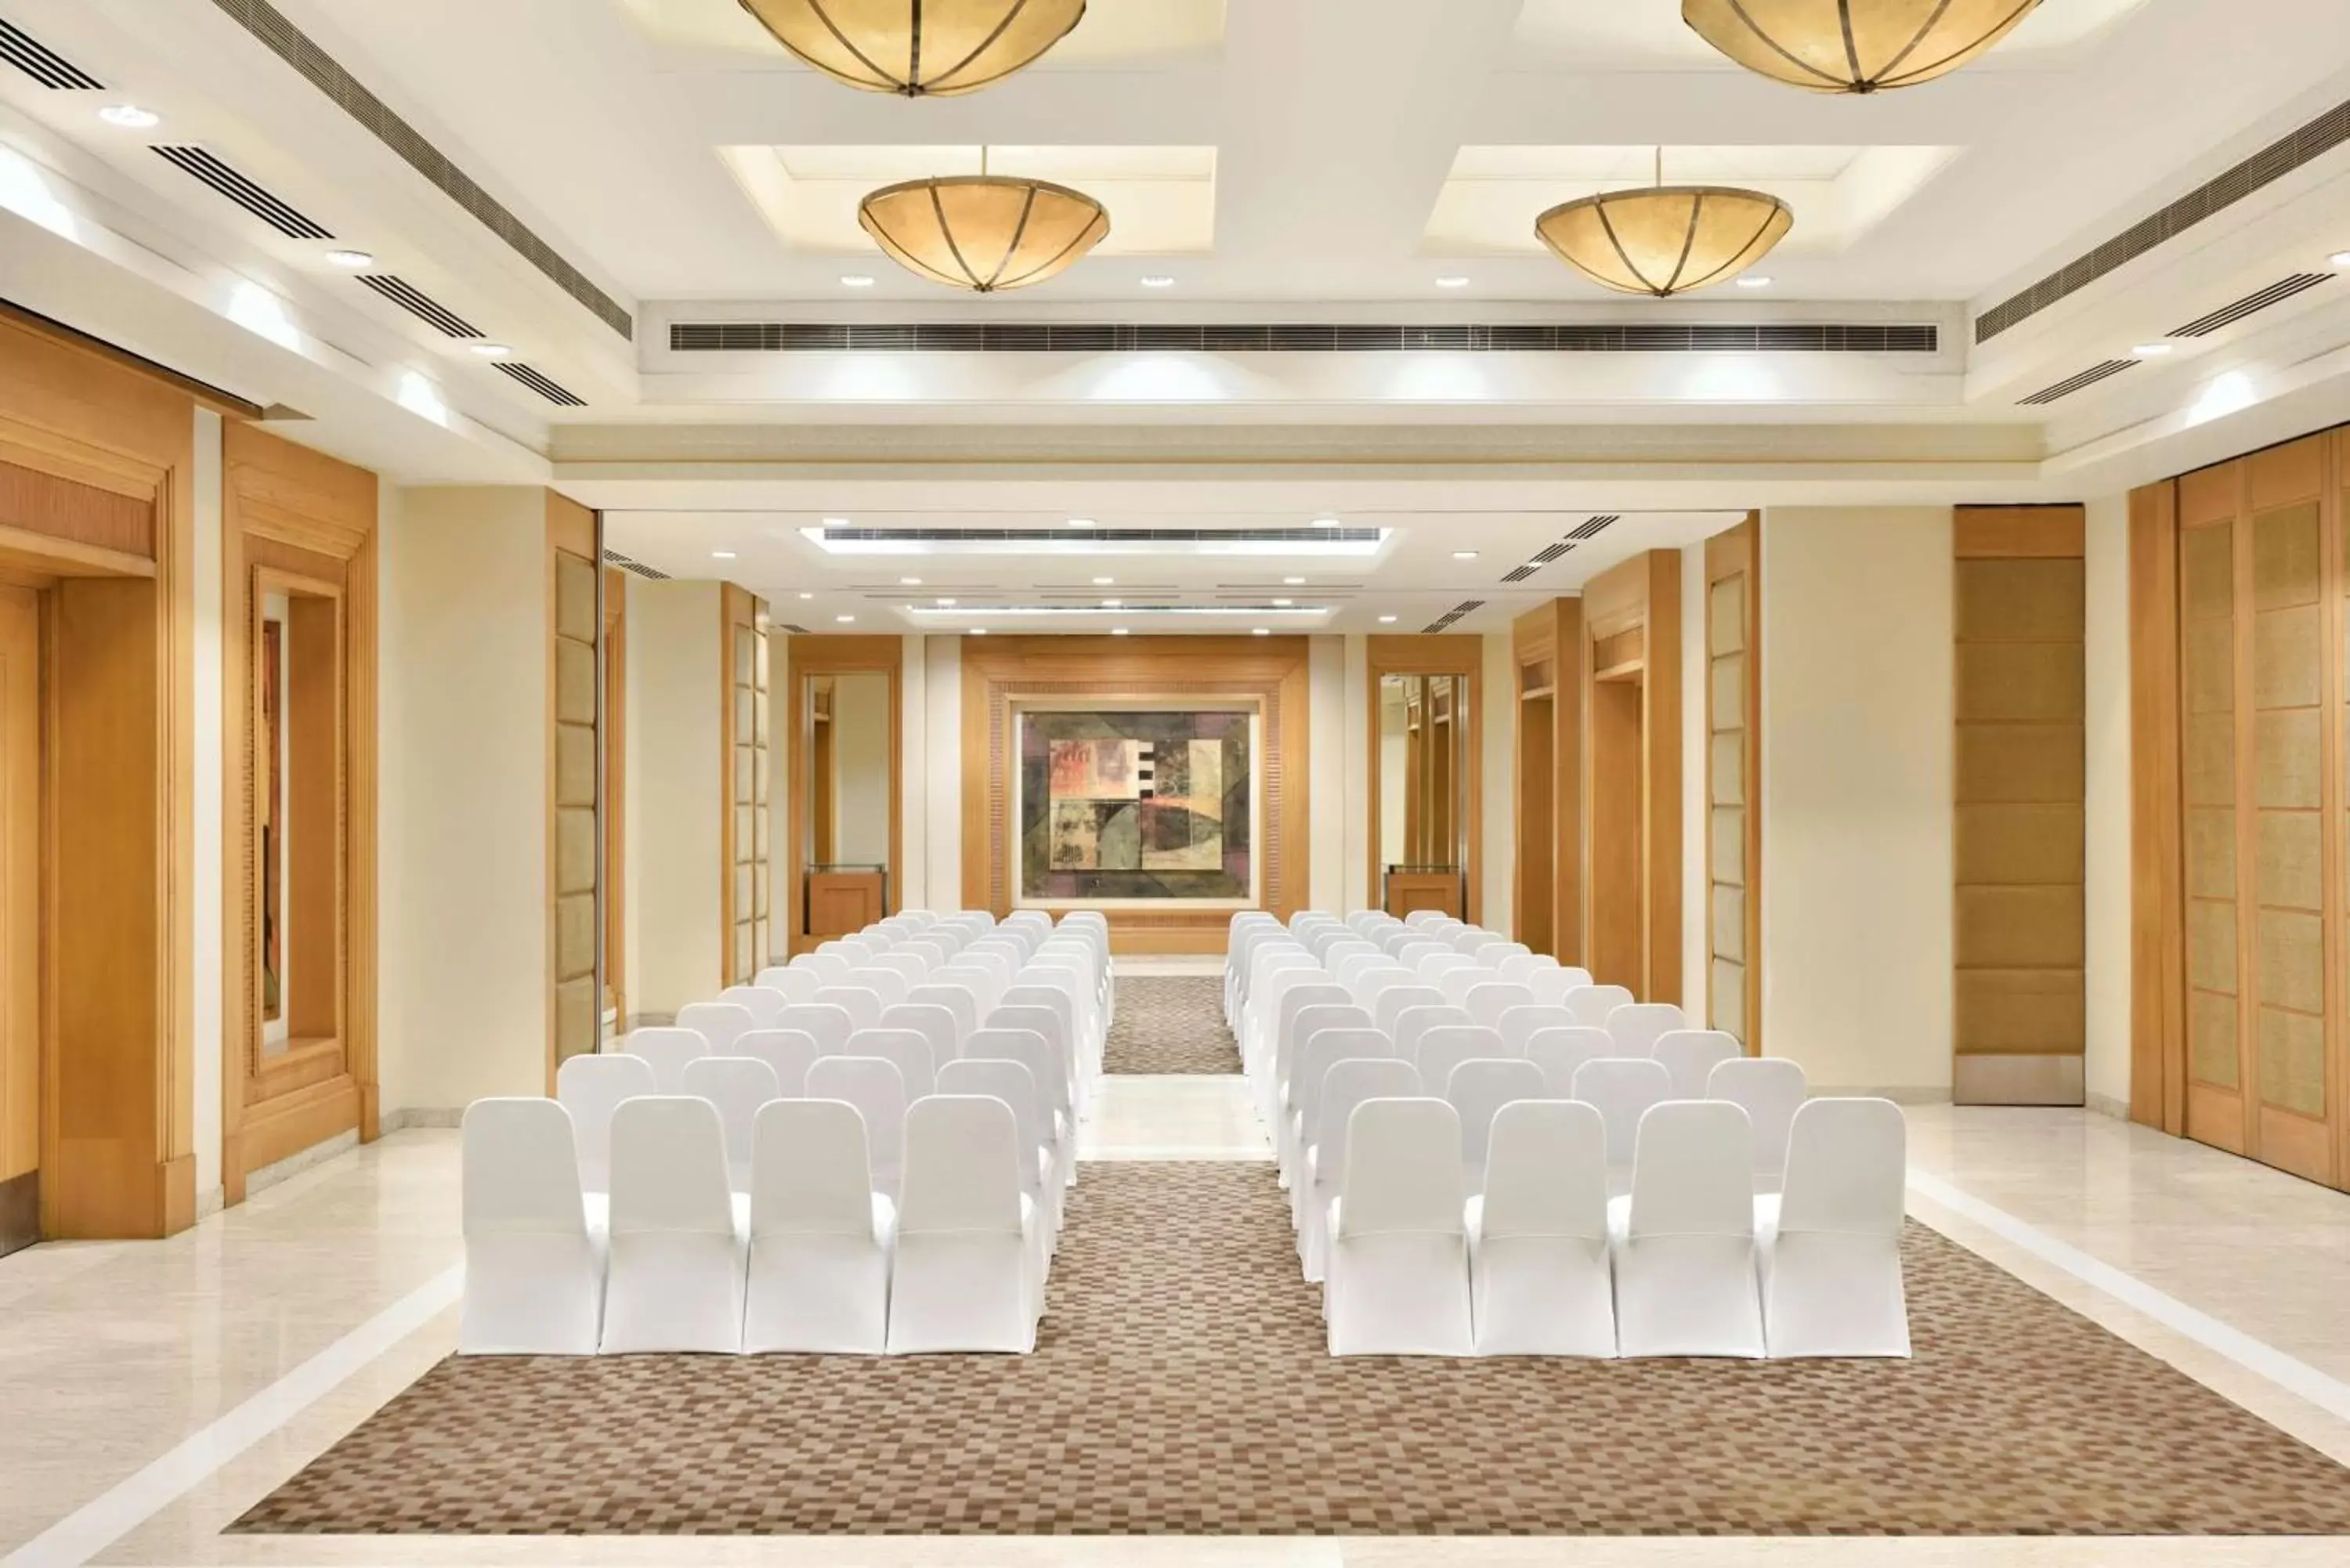 Banquet/Function facilities, Banquet Facilities in Radisson Noida